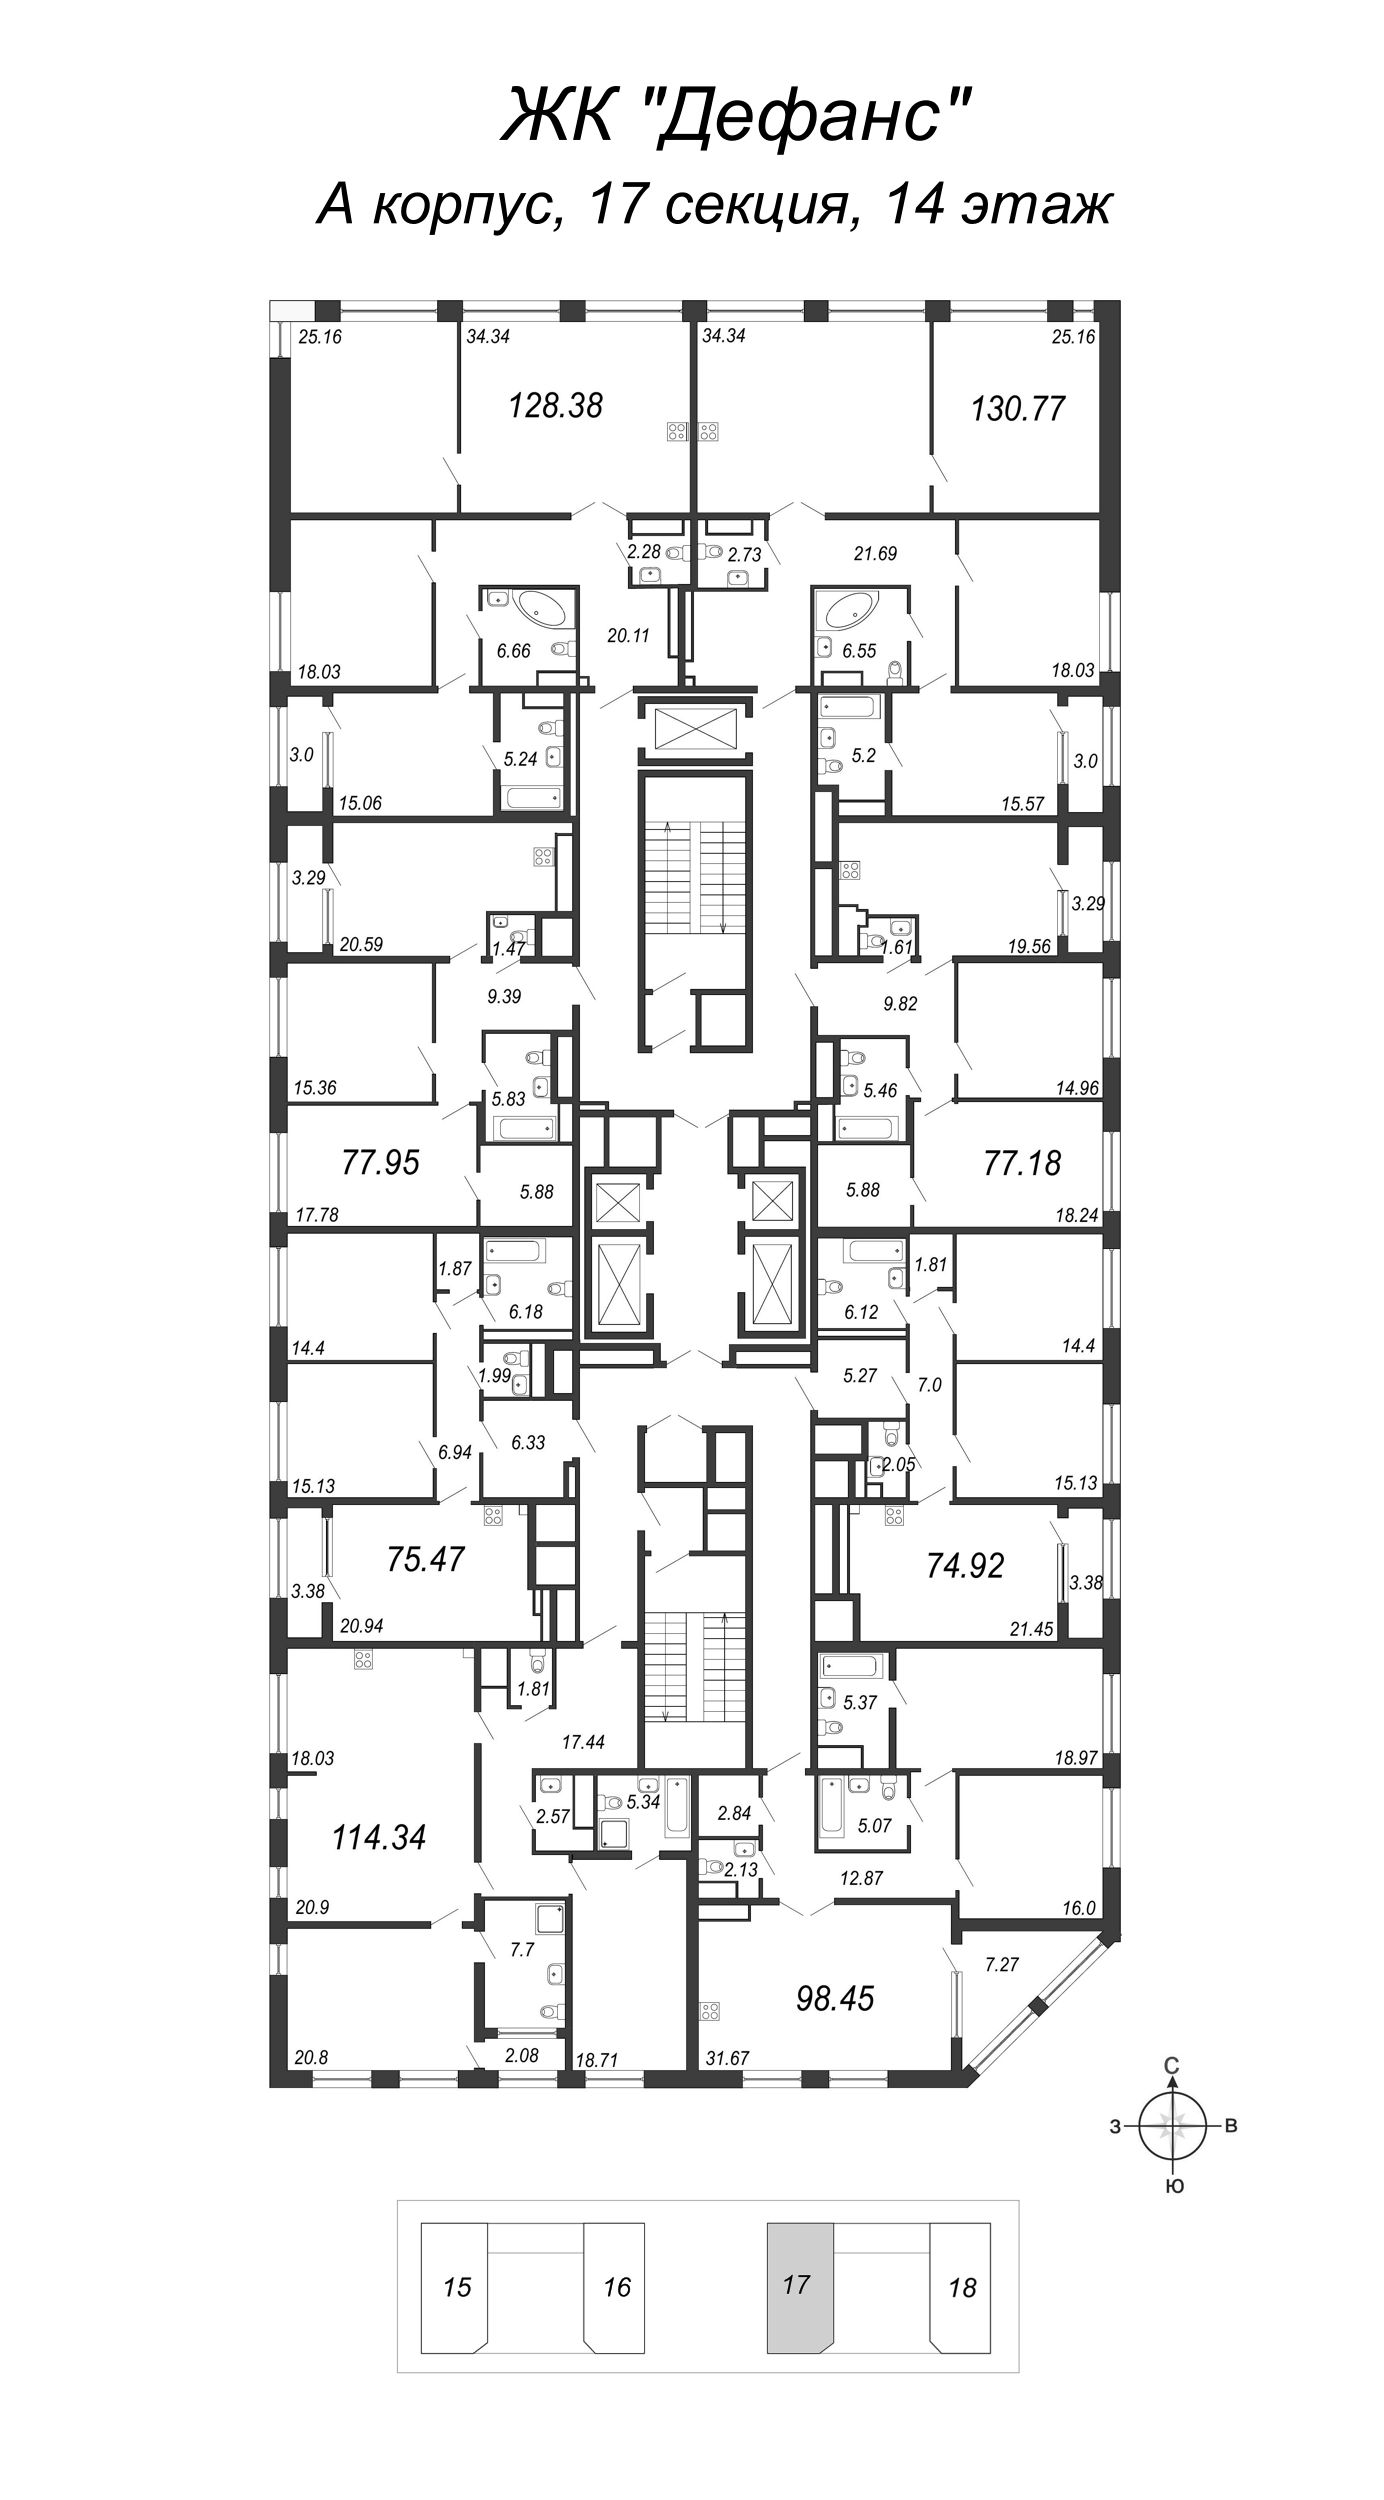 3-комнатная (Евро) квартира, 77.18 м² - планировка этажа